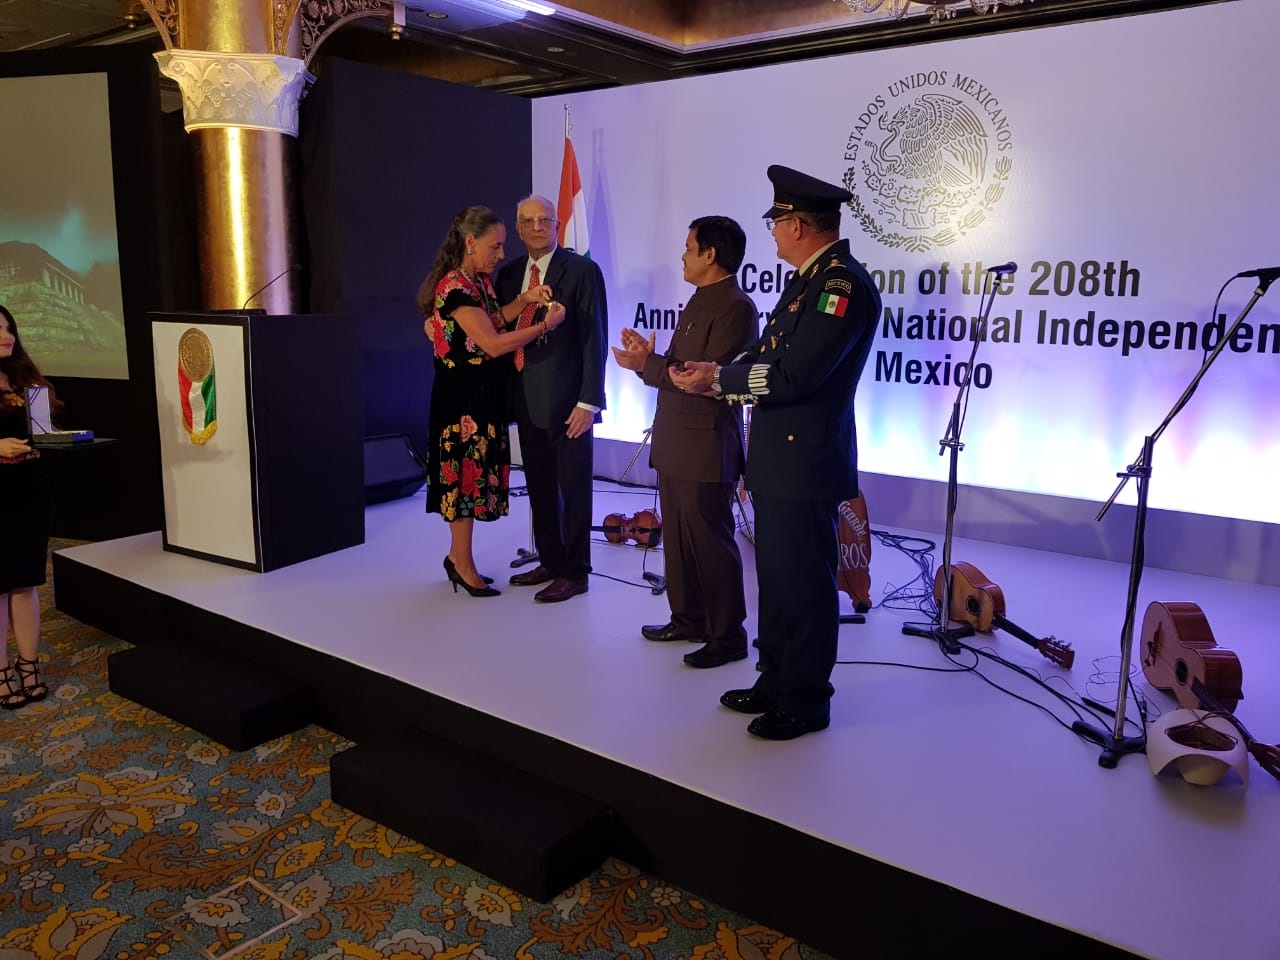 Mr. Rajju Shroff receiving the Mexican Order of the Aztec Eagle insignia from Ambassador Melba Pria